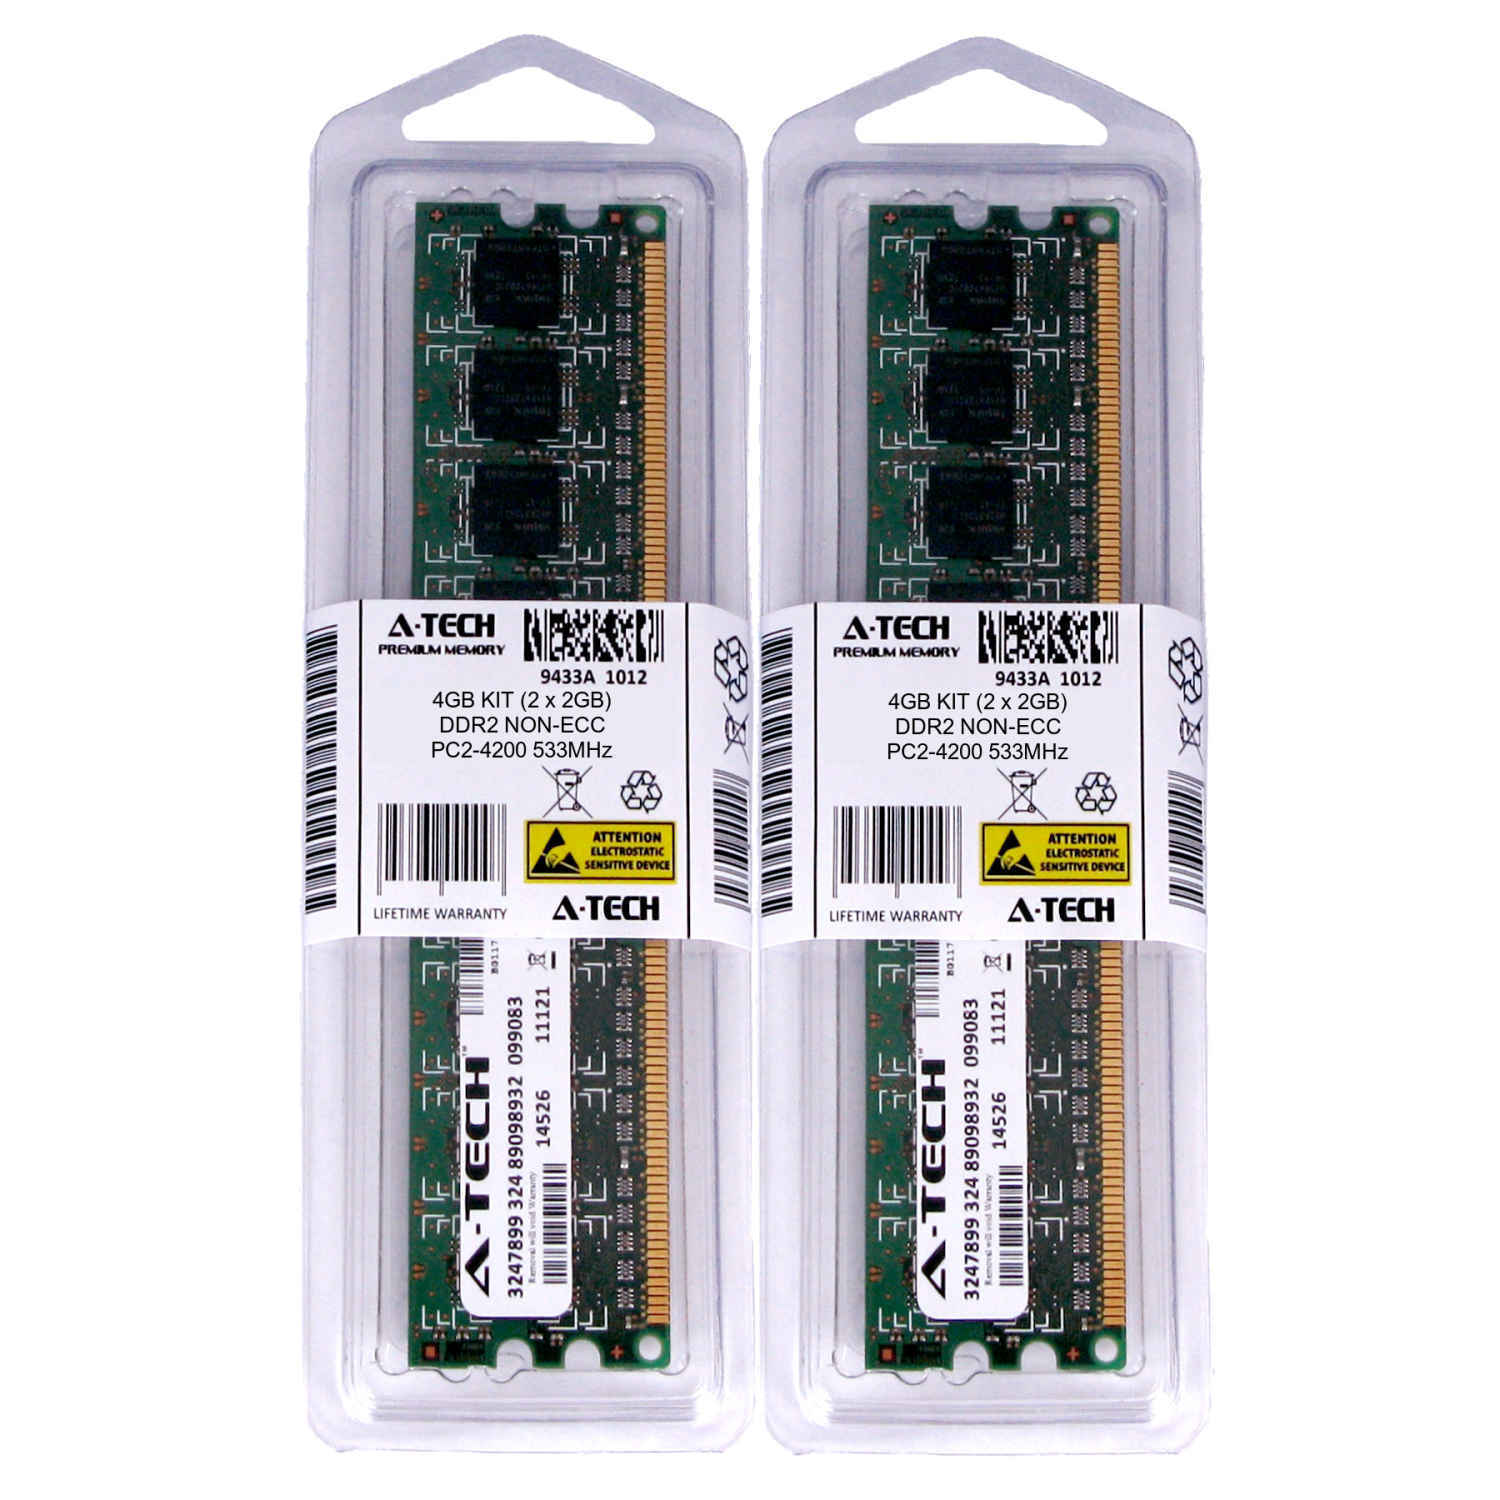 4GB KIT 2 x 2GB DIMM DDR2 NON-ECC PC2-4200 533MHz 533 MHz DDR-2 DDR 2 Ram Memory